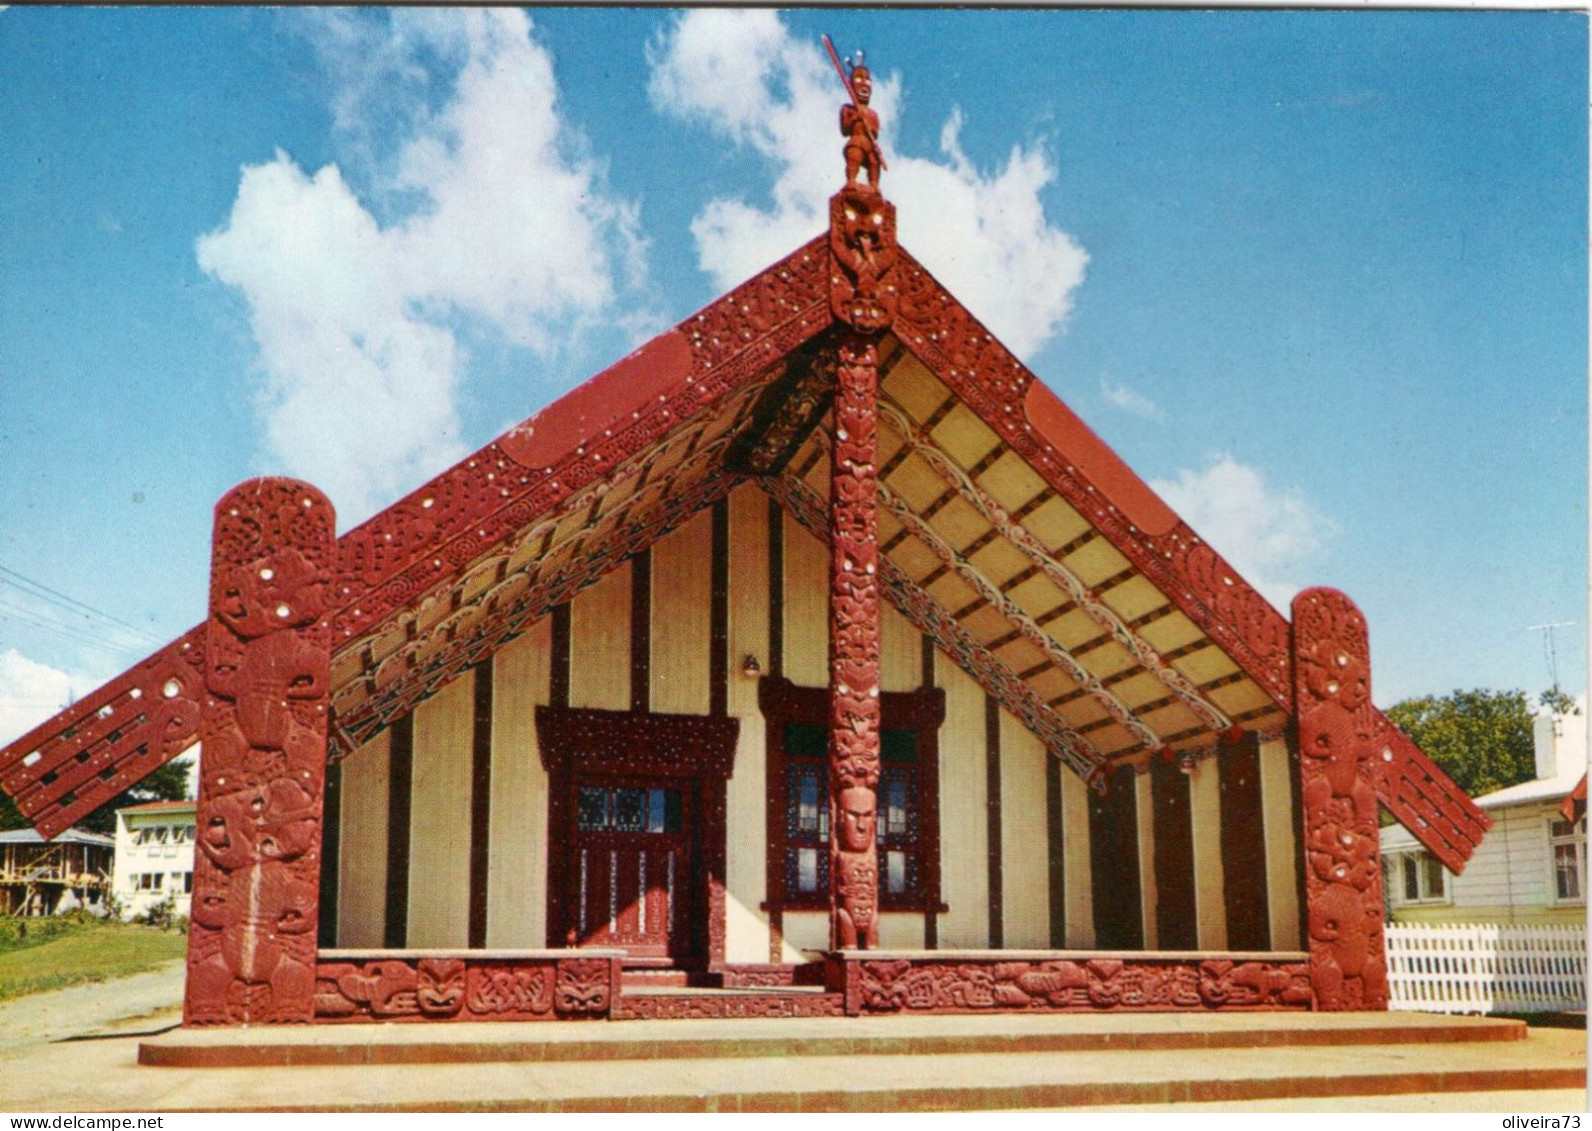 NEW ZEALAND - ROTURUA - Tamatekapua  Meeting House, Ohinemmutu - Nouvelle-Zélande